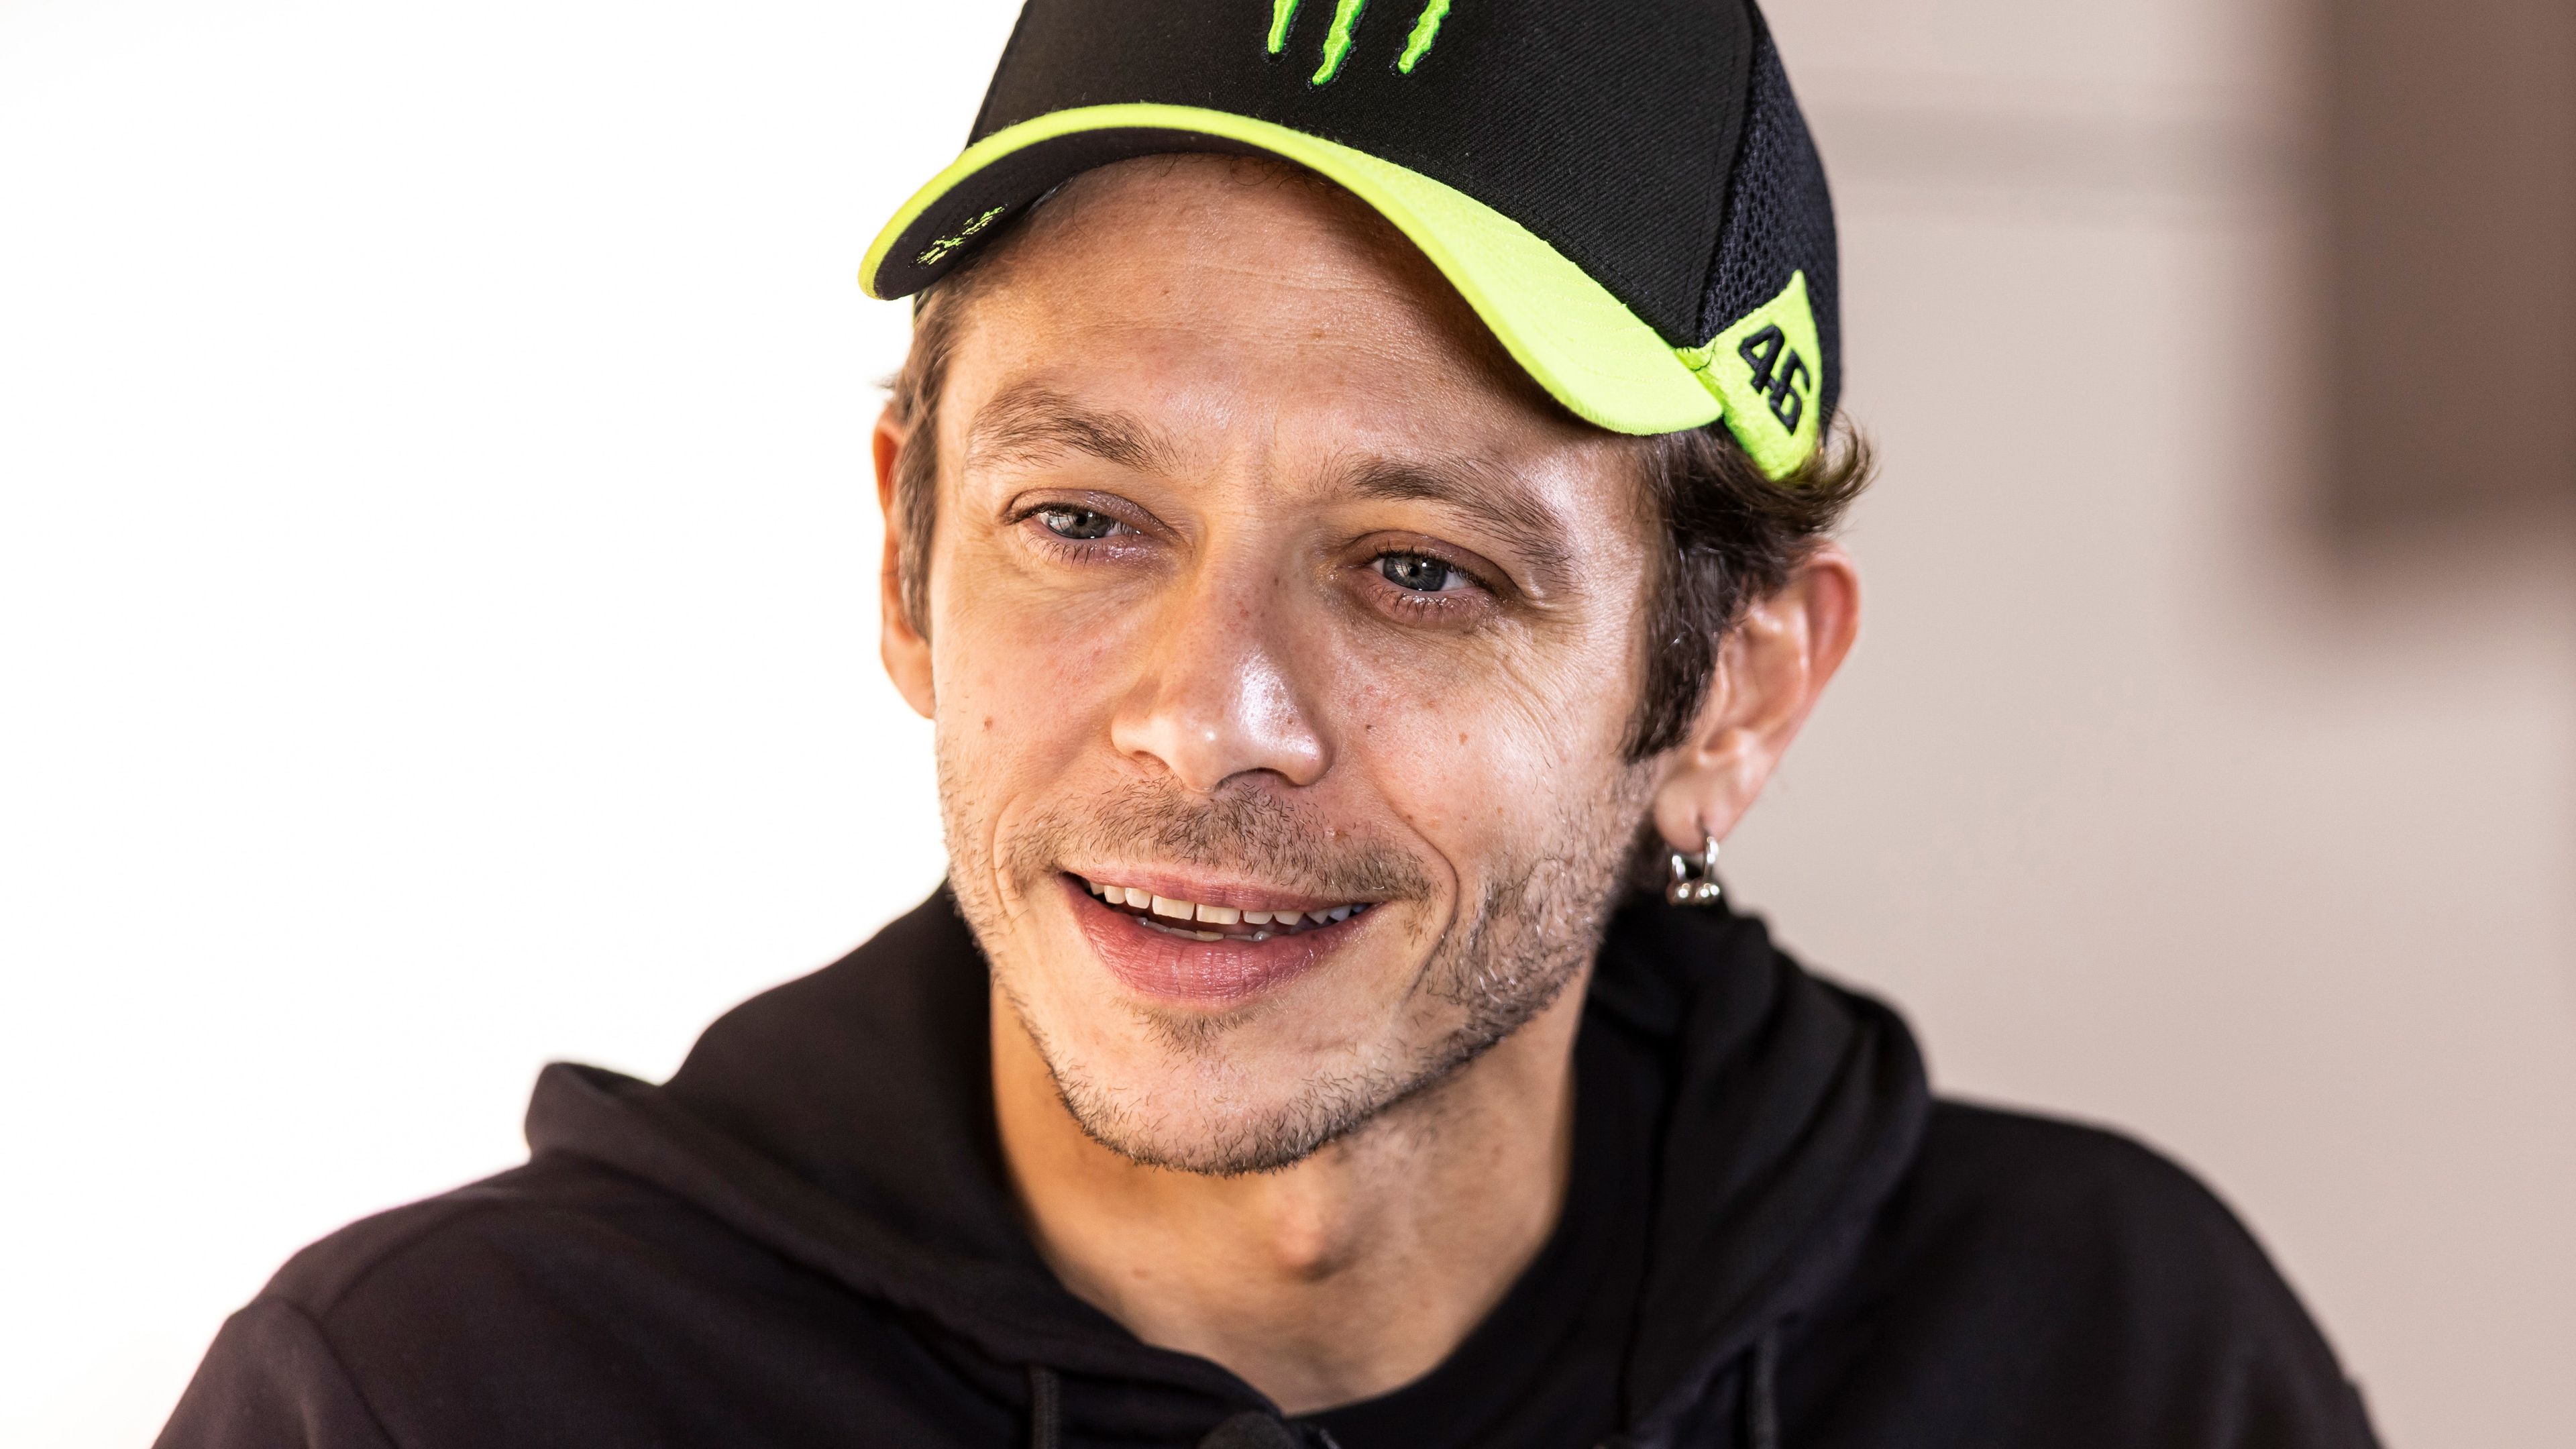 MotoGP legend Valentino Rossi to make Bathurst 12-hour start